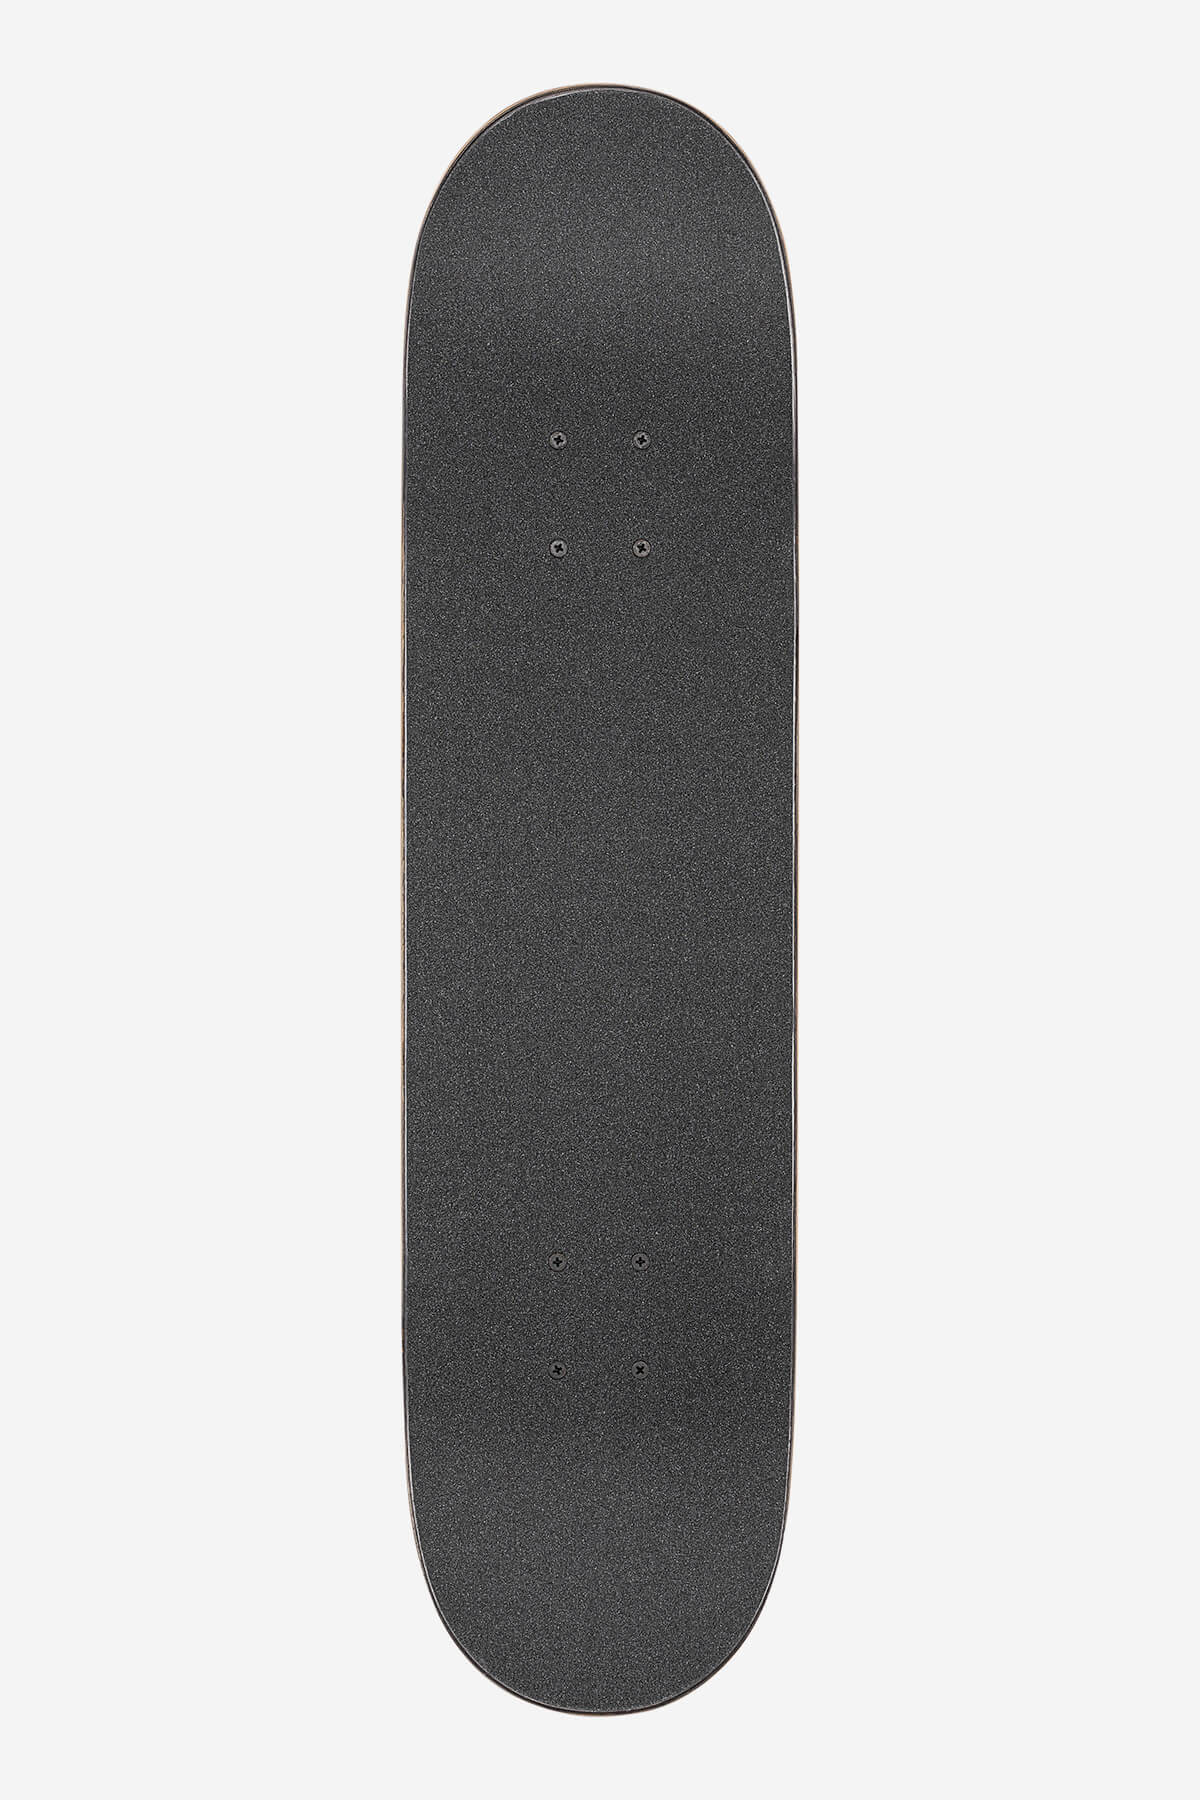 Globe - G1 Ablaze - Black Dye - 8.0" complet Skateboard